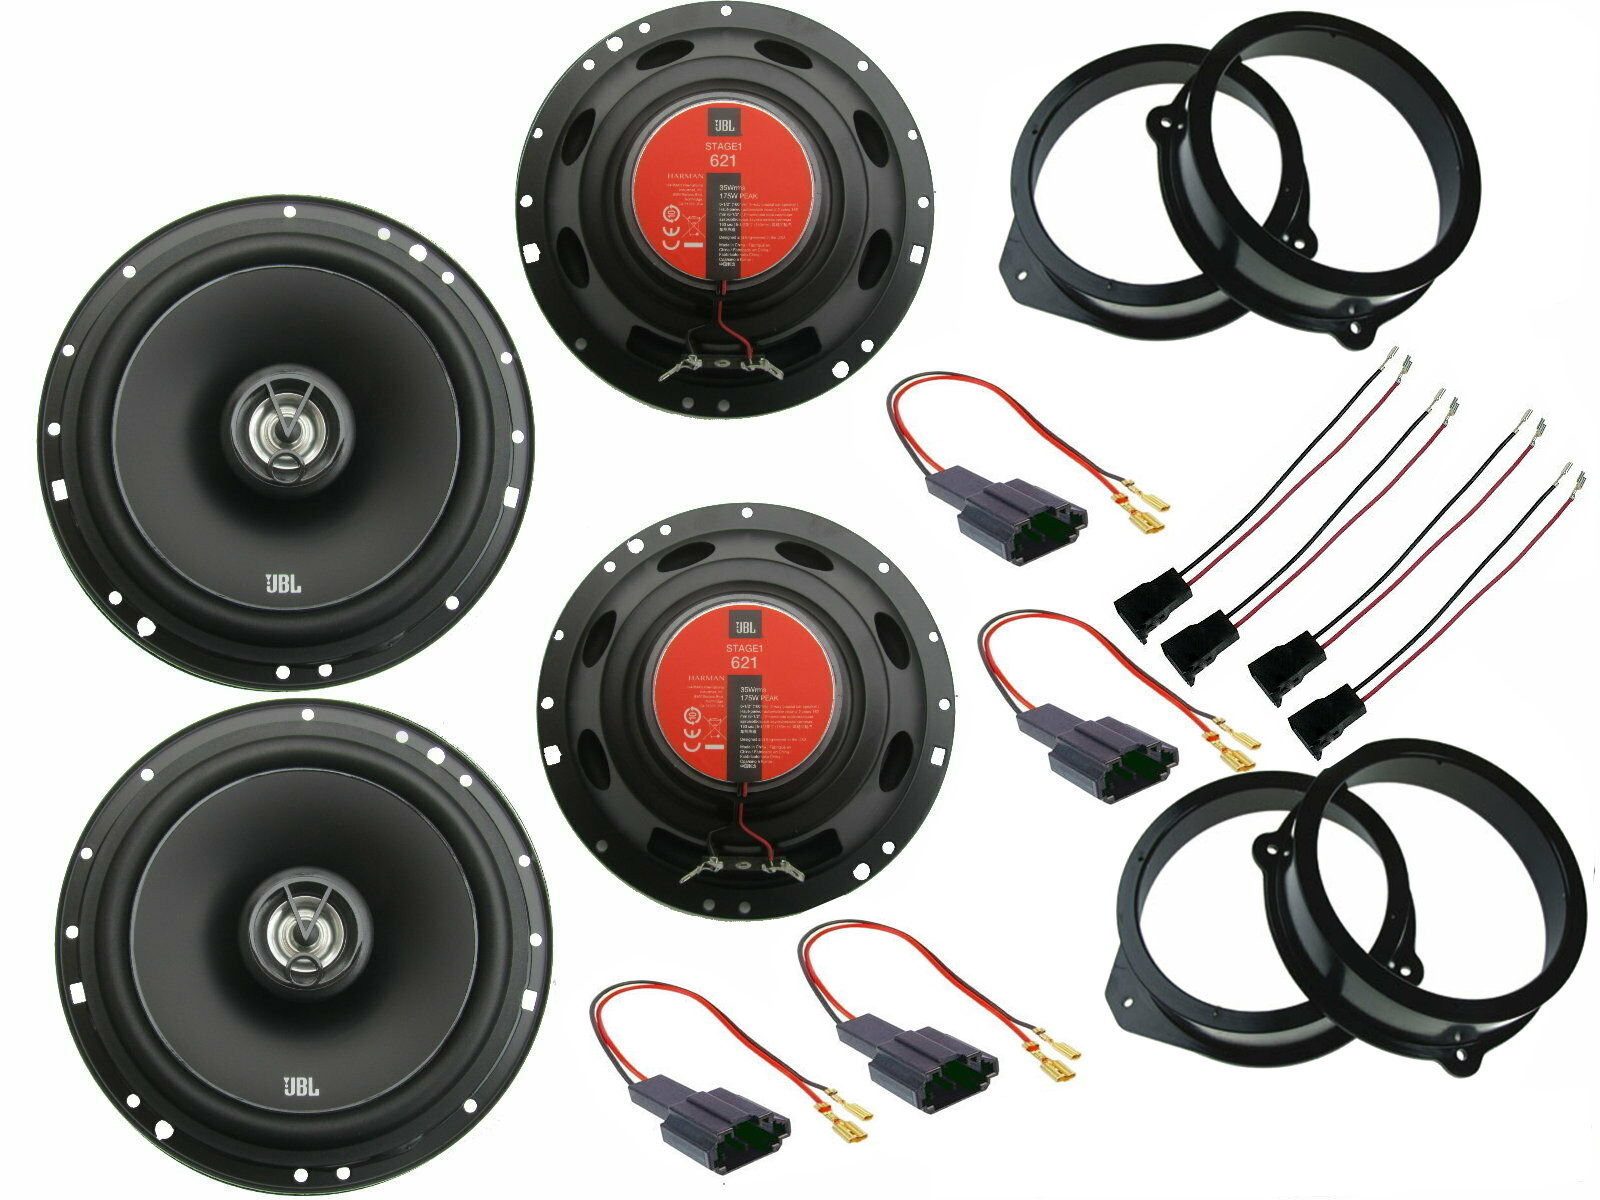 DSX JBL Lautsprecher Set für Audi A4 B6 8E Bj 00- 04 Tür vorn hinten 700W Auto-Lautsprecher (80 W)